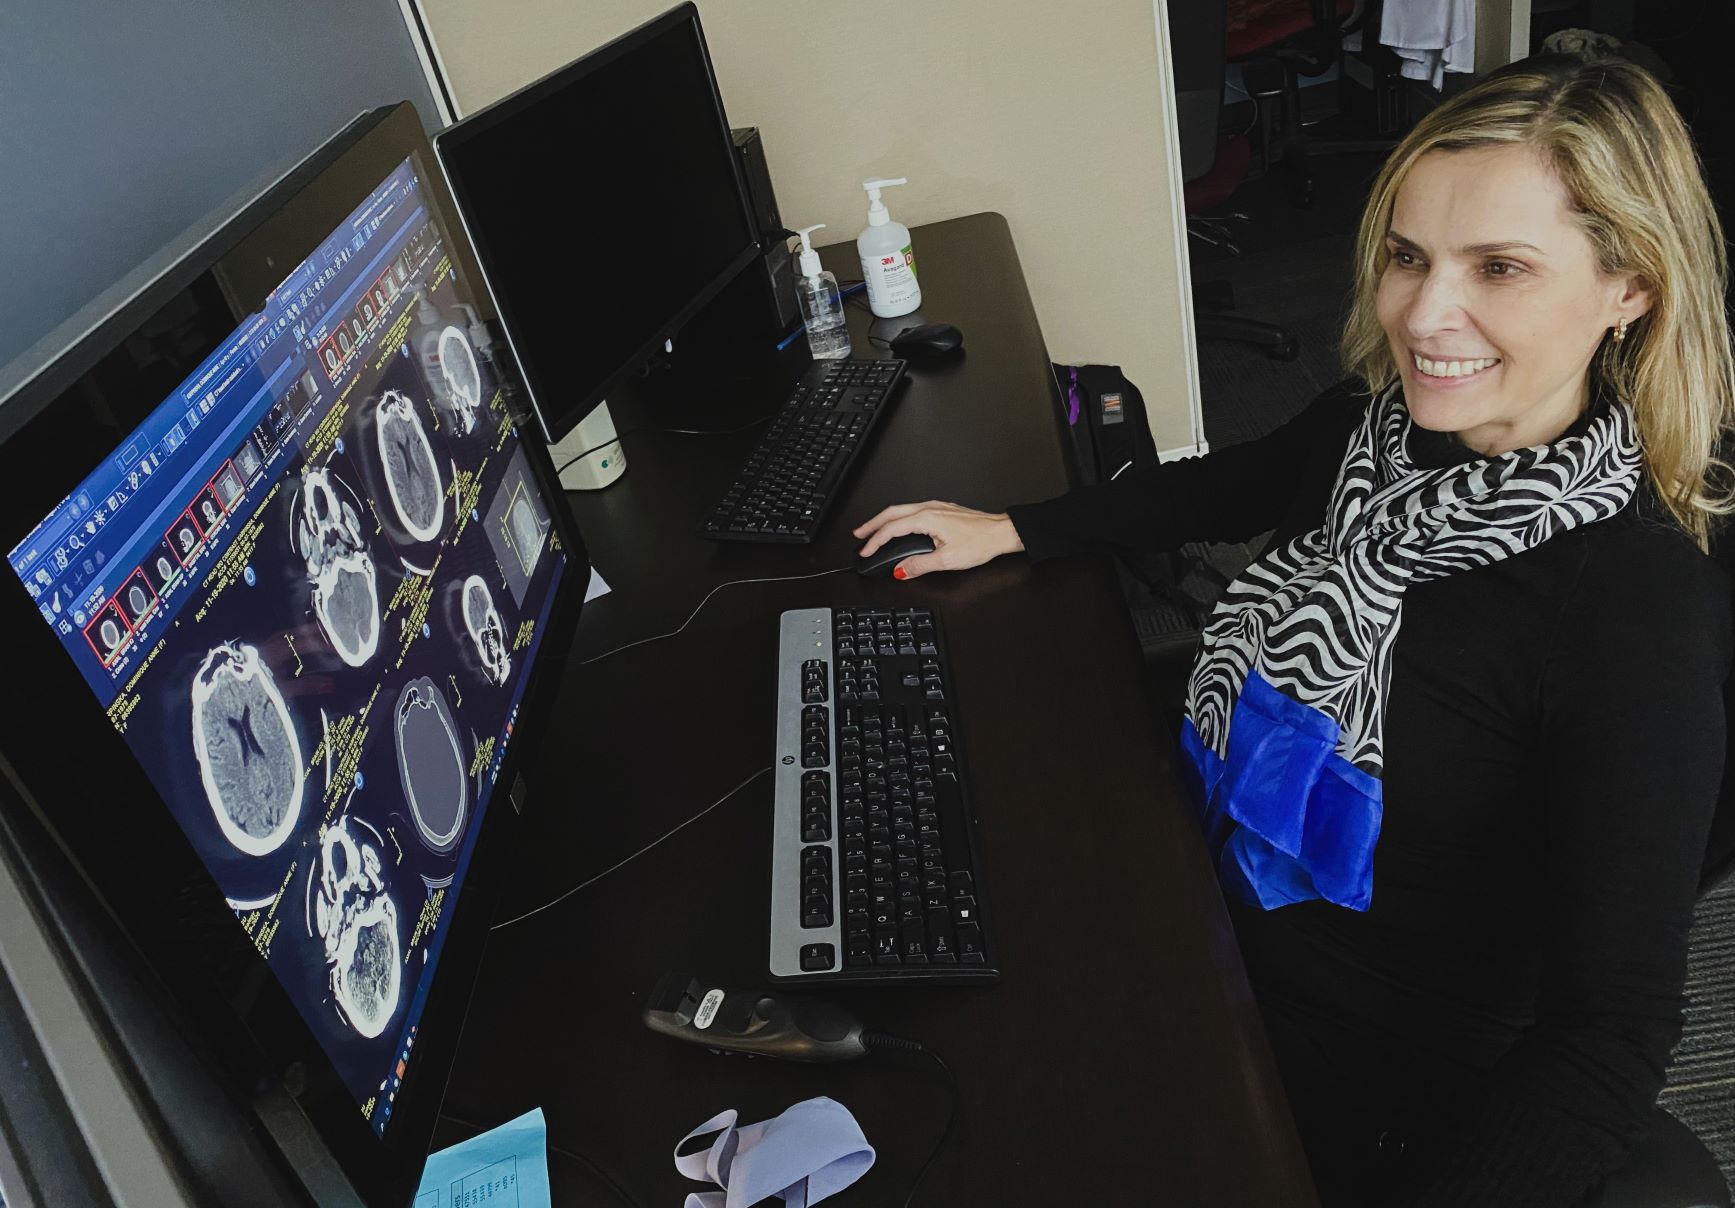 Diagnostic Radiology ABR Alt Path Fellow- Ana Santos Lima viewing a brain MRI scan on a PACS computer.